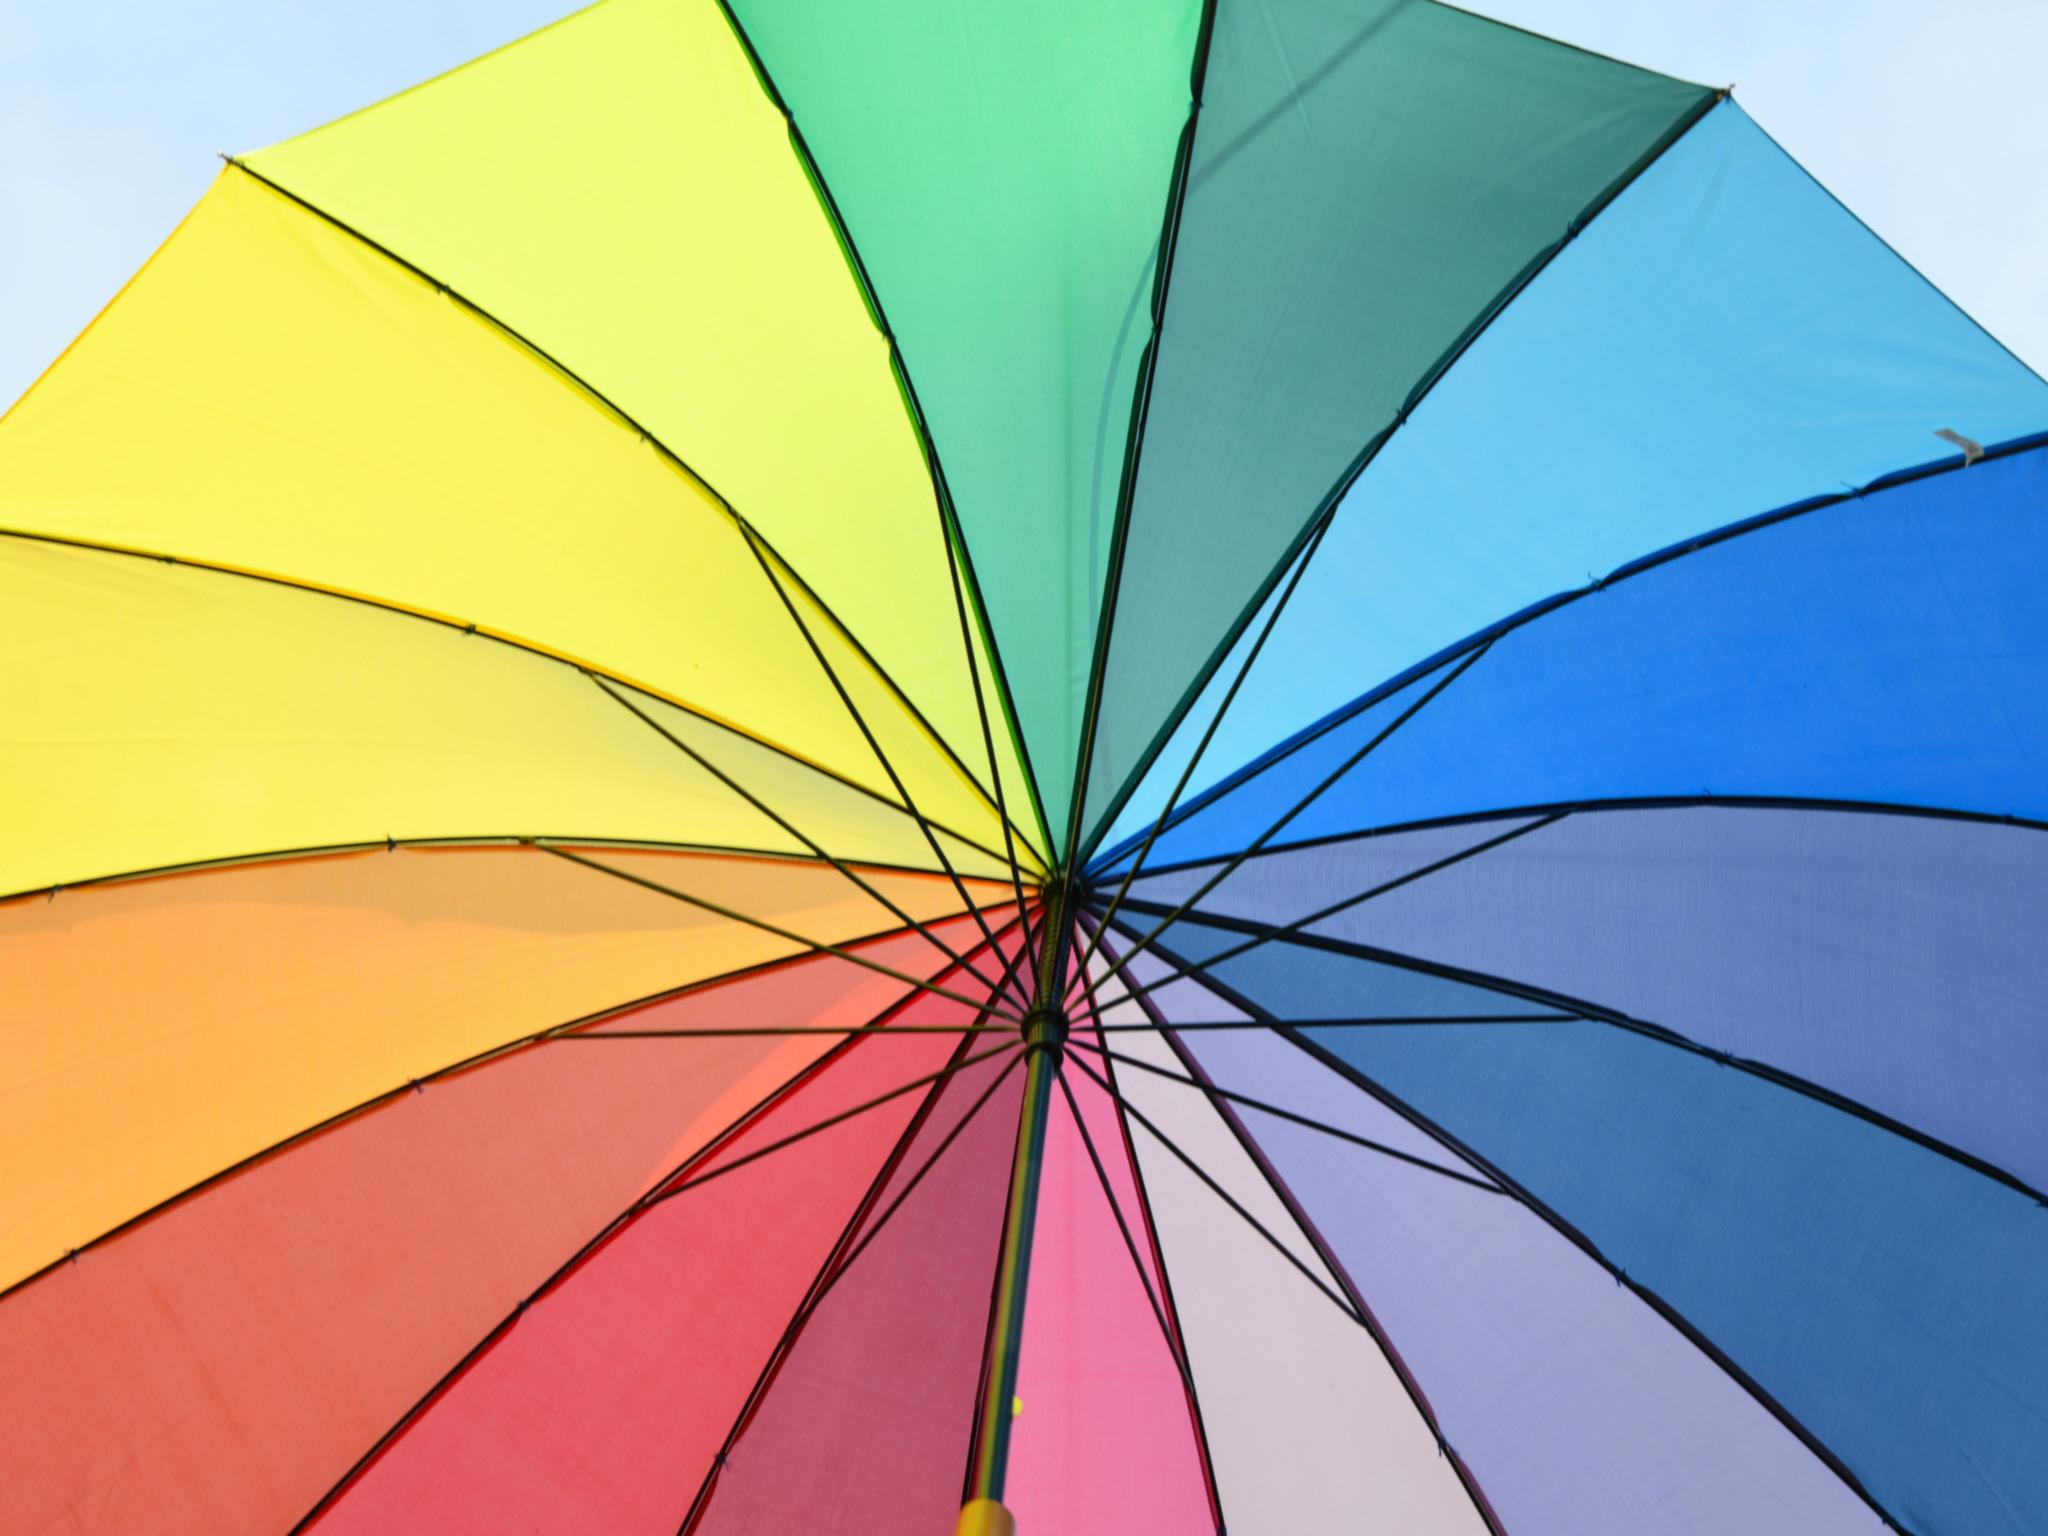 Regenbogenschirm_by_Wolfgang_Cibura_pfarrbriefservice.jpg